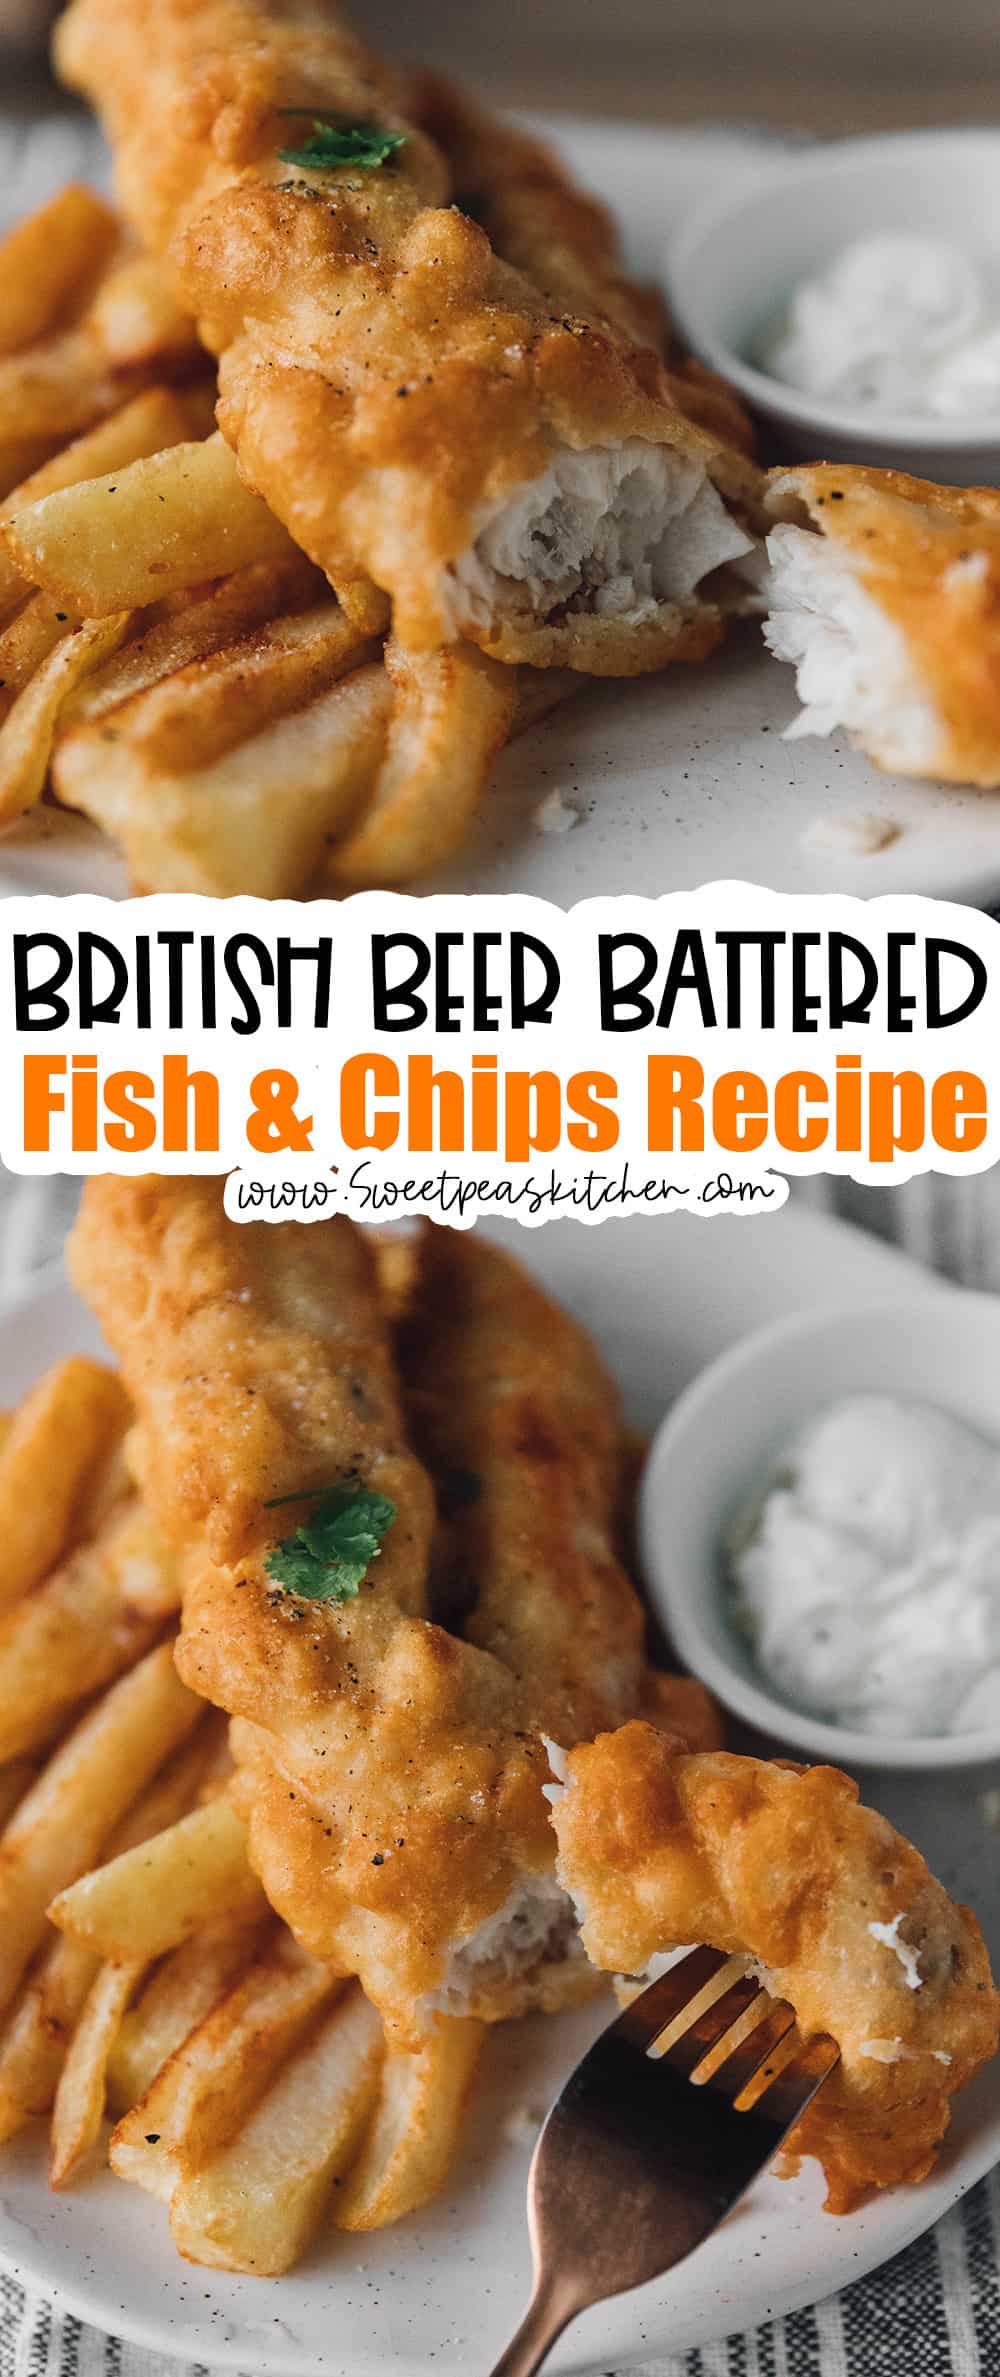 British Beer Battered Fish & Chips